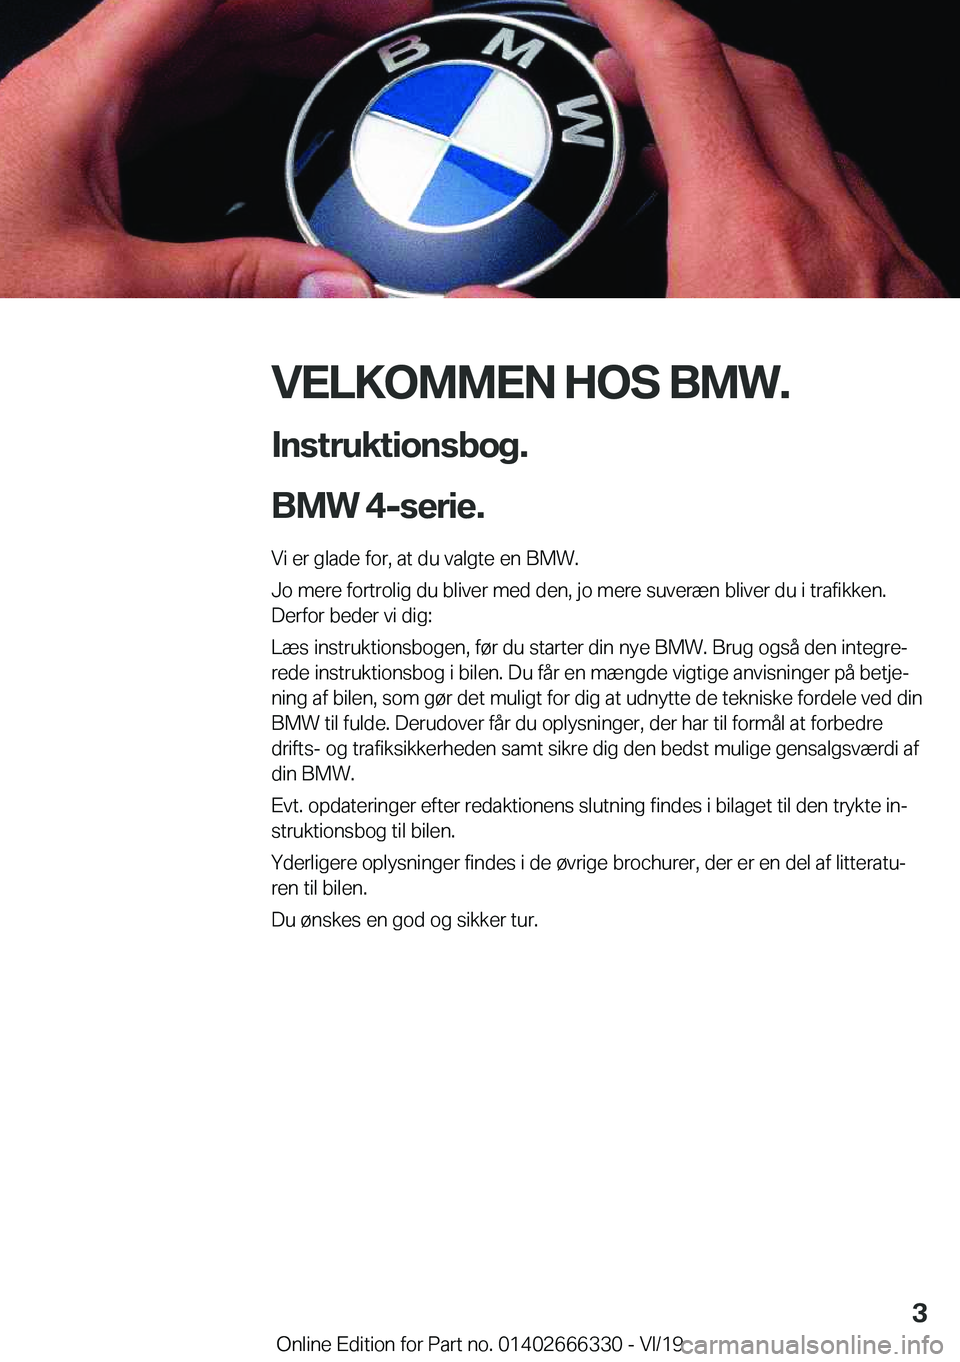 BMW 4 SERIES COUPE 2020  InstruktionsbØger (in Danish) �V�E�L�K�O�M�M�E�N��H�O�S��B�M�W�.
�I�n�s�t�r�u�k�t�i�o�n�s�b�o�g�.
�B�M�W��4�-�s�e�r�i�e�.� �V�i��e�r��g�l�a�d�e��f�o�r�,��a�t��d�u��v�a�l�g�t�e��e�n��B�M�W�.
�J�o��m�e�r�e��f�o�r�t�r�o